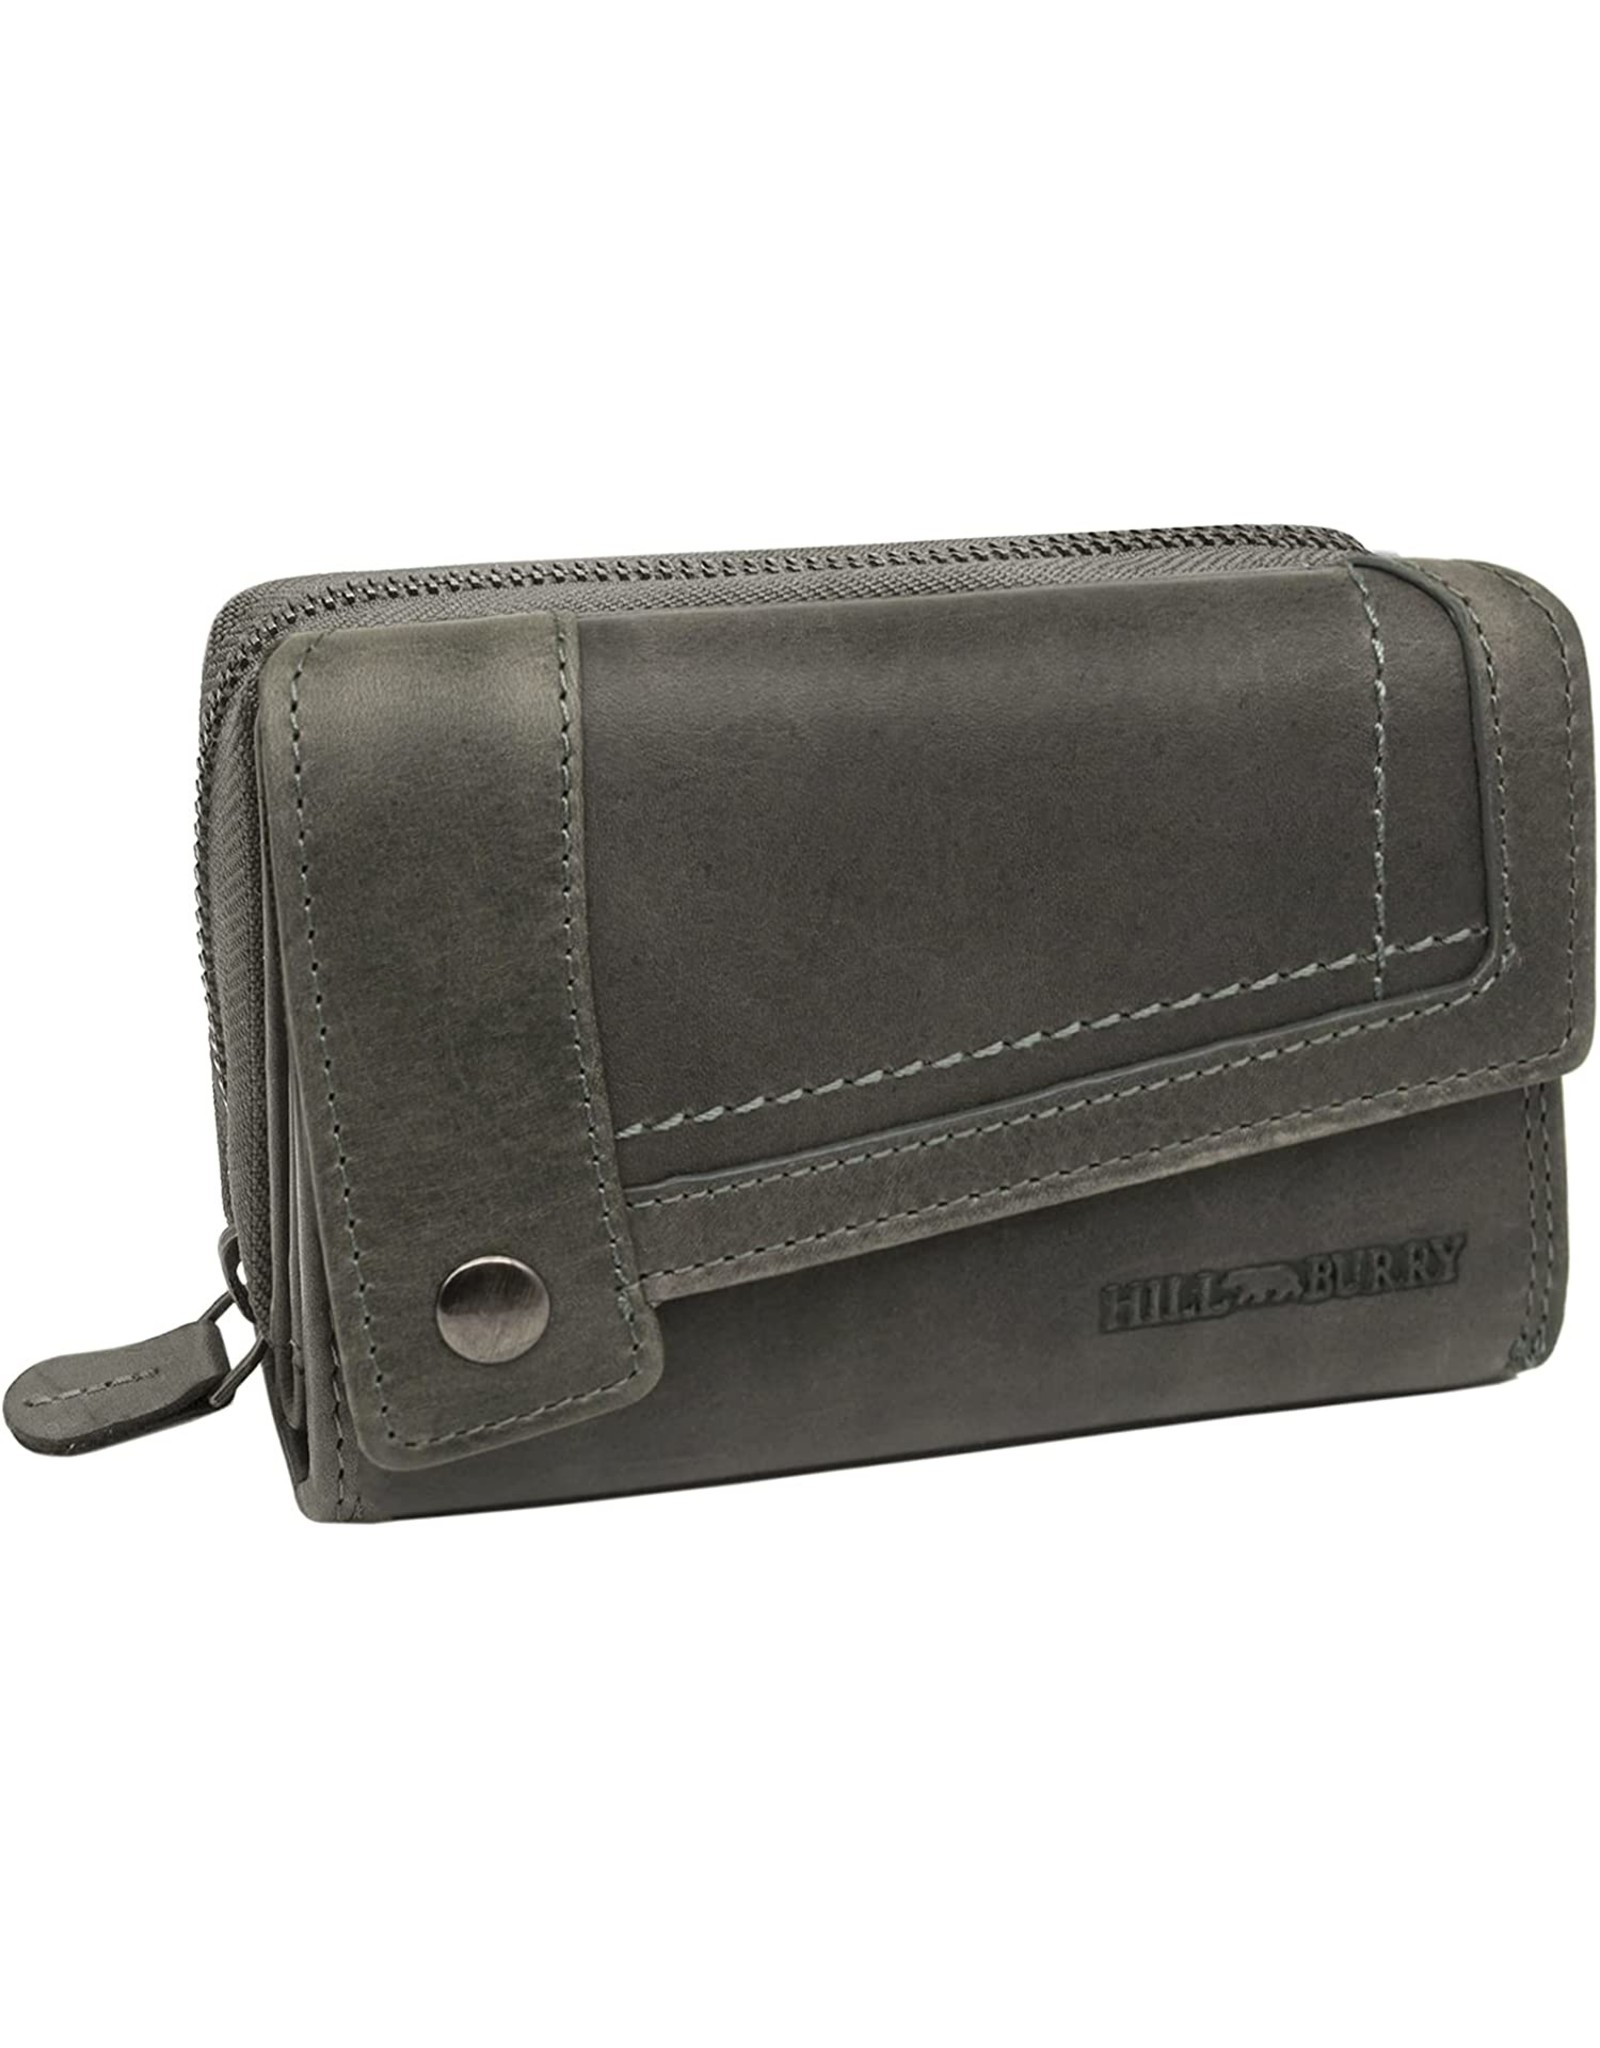 HillBurry Leather wallets - HillBurry Leather Wallet Grey  with RFID